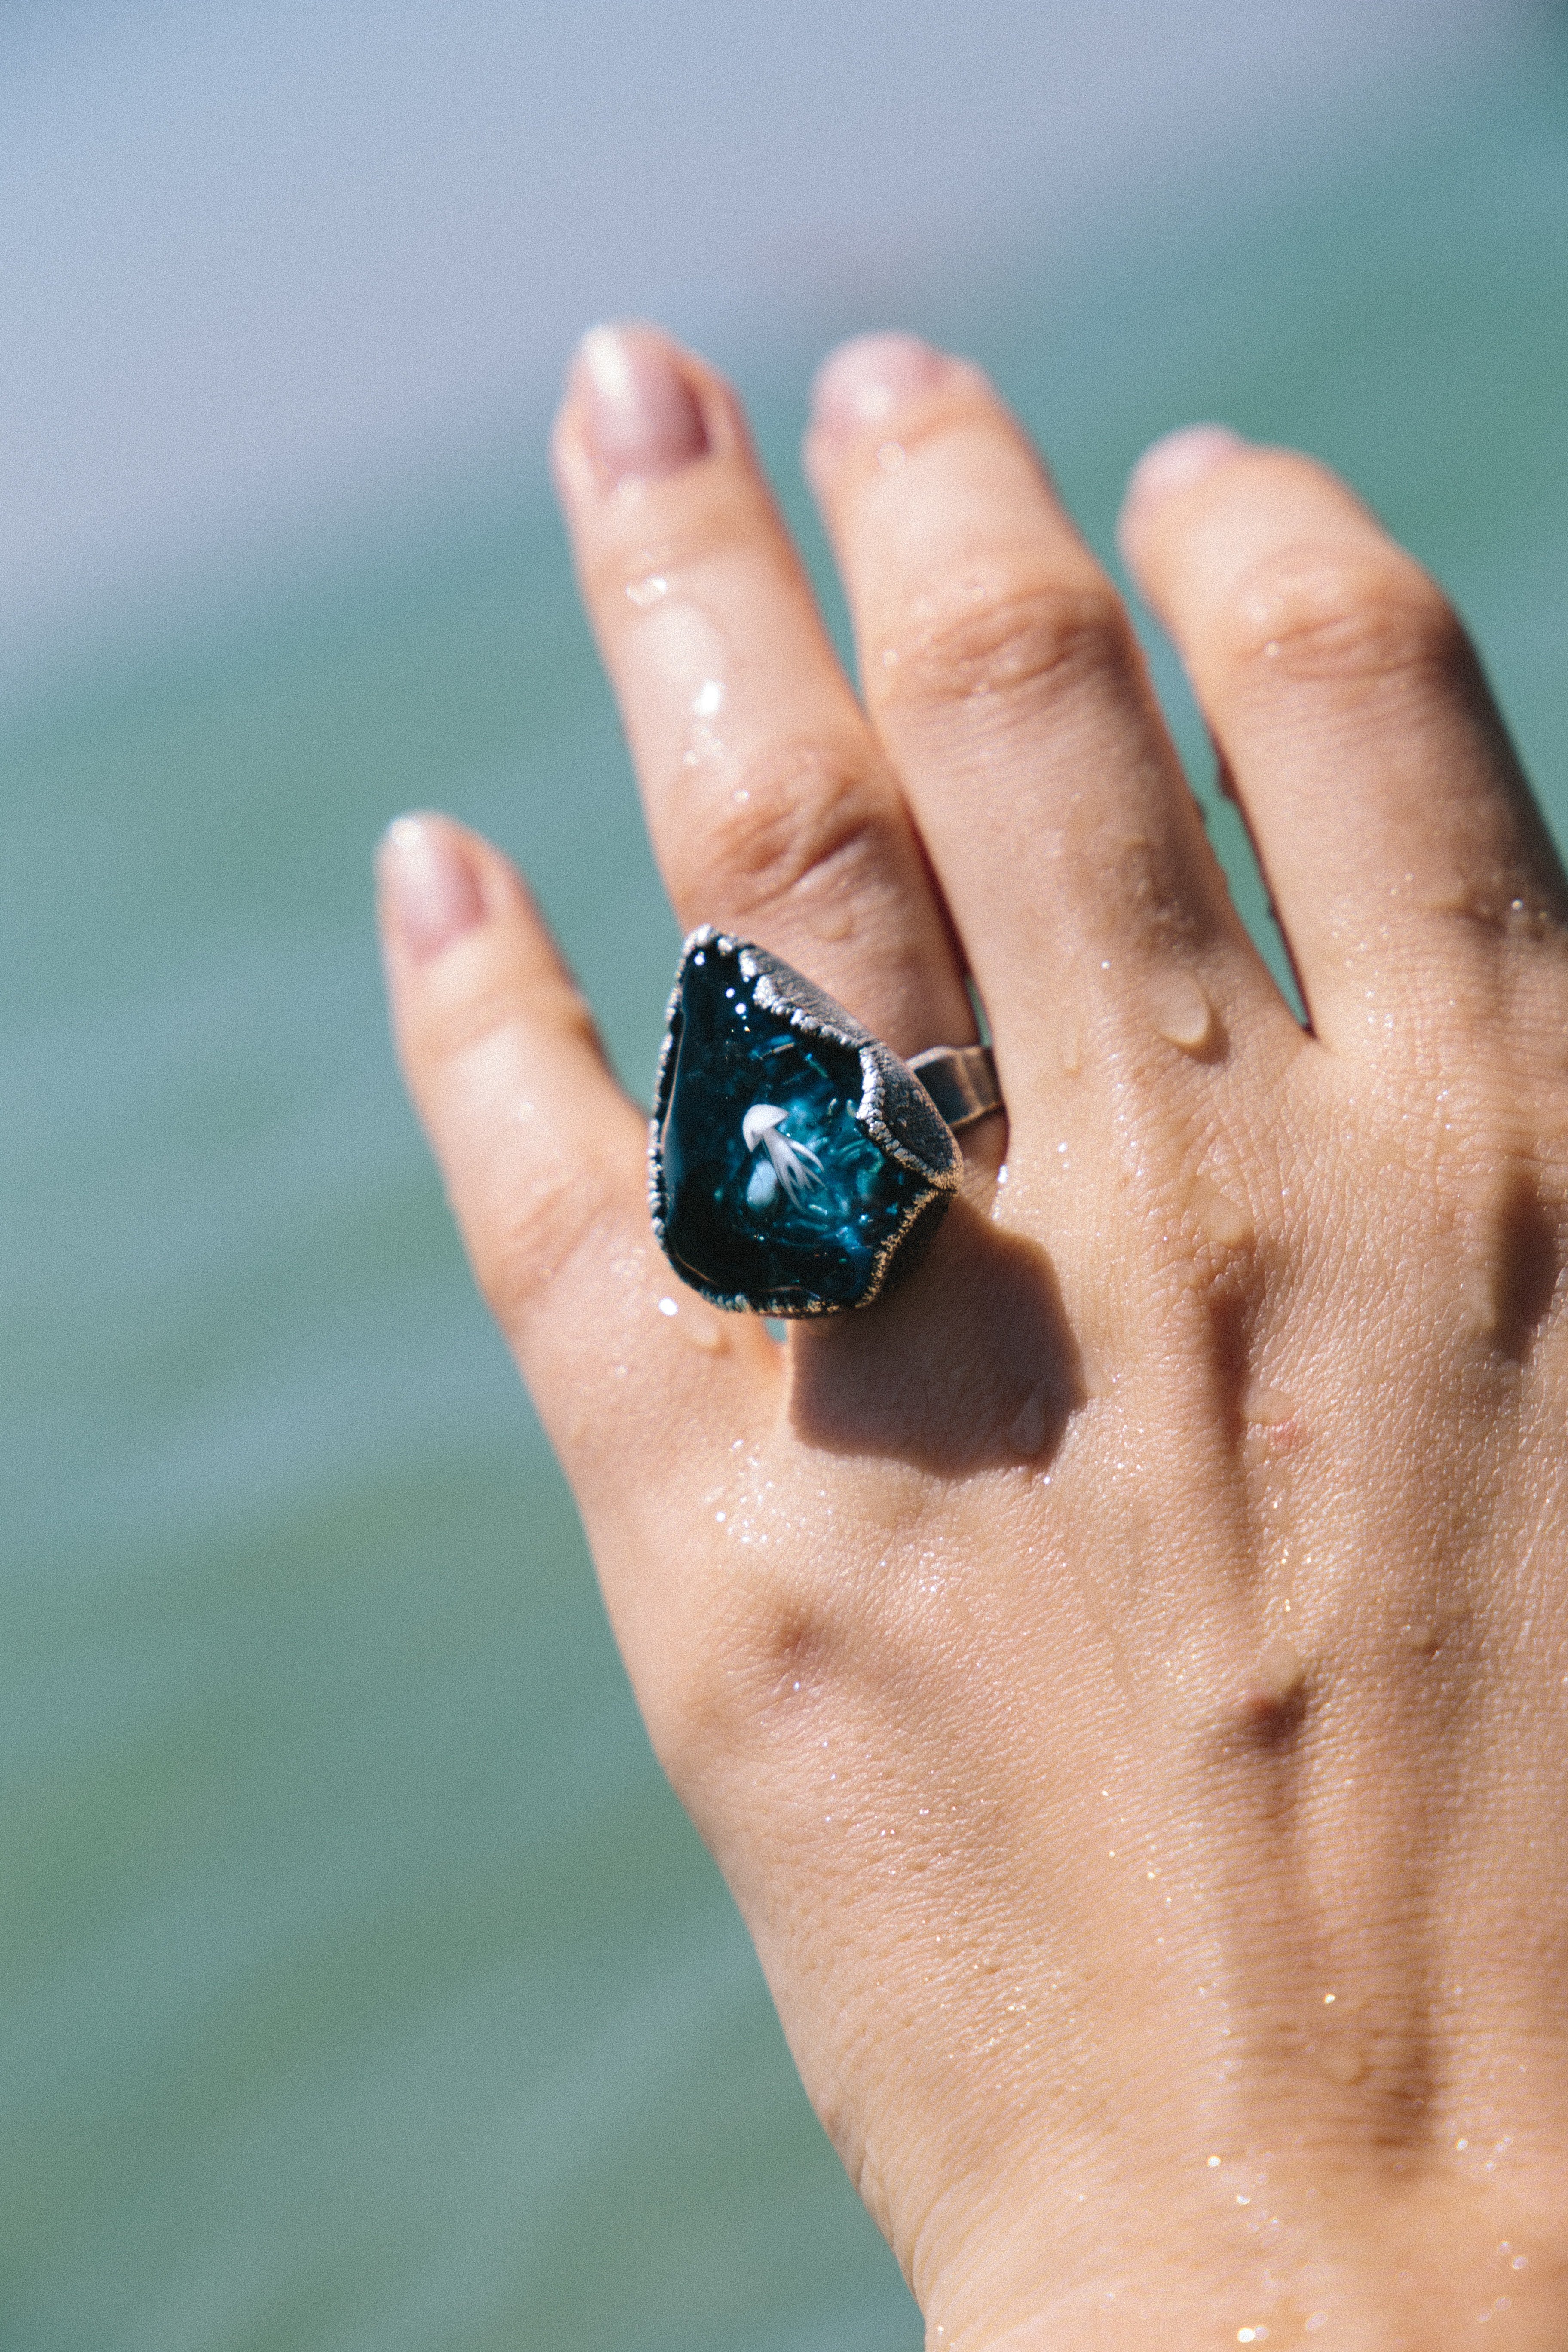 A woman wears a large blue gem on her ring finger | Photo: Unsplash/Klara Kulikova 